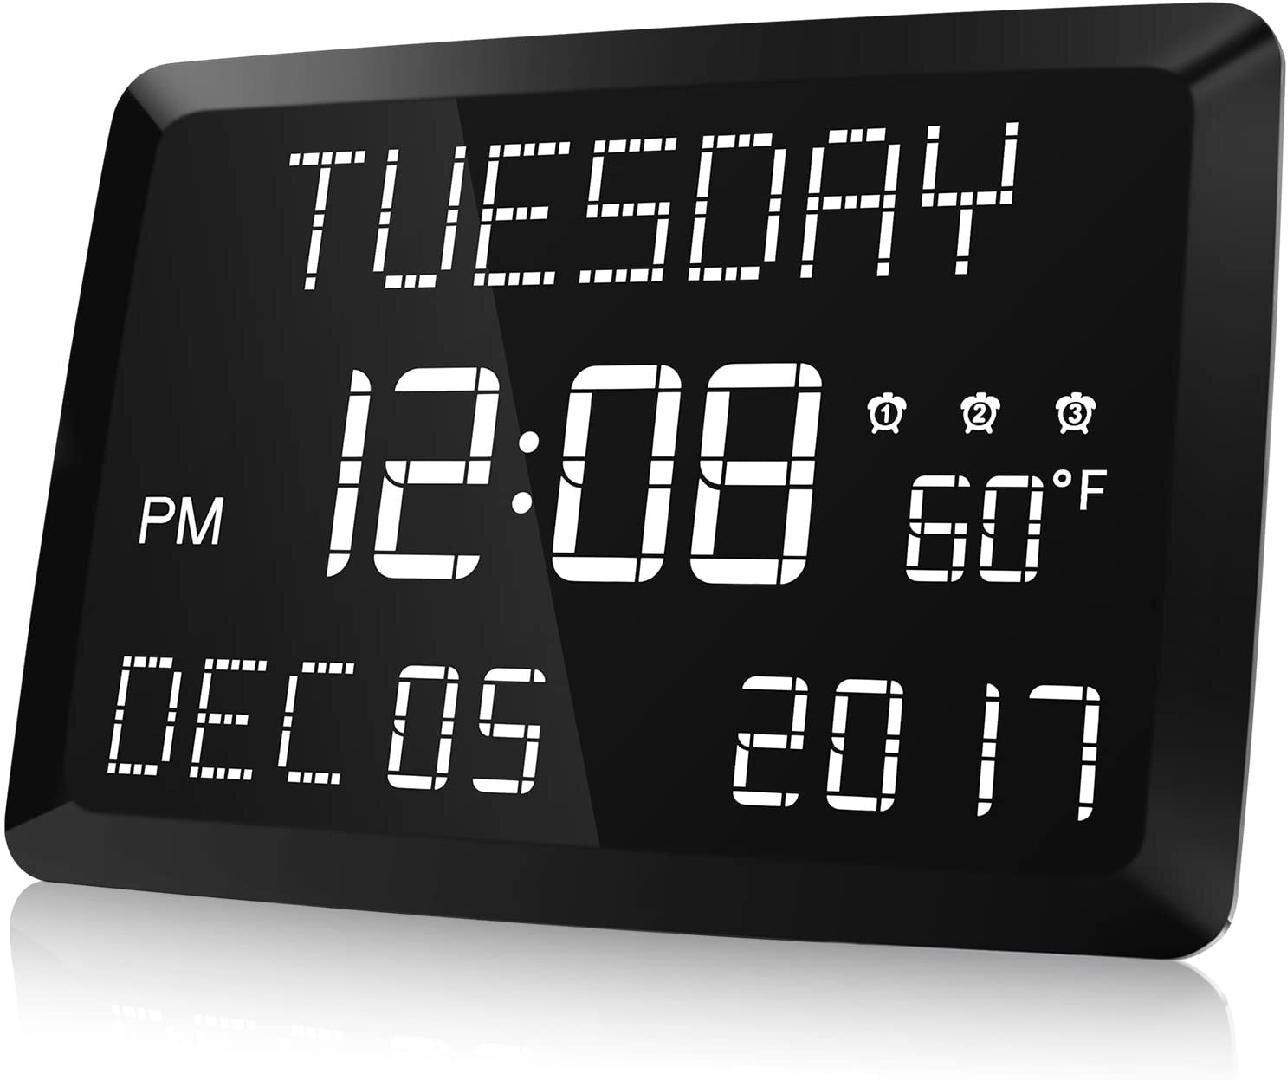 Digital Big Large 3D LED Wall Desk Clock Alarm Snooze Temperature Date 12/24H 